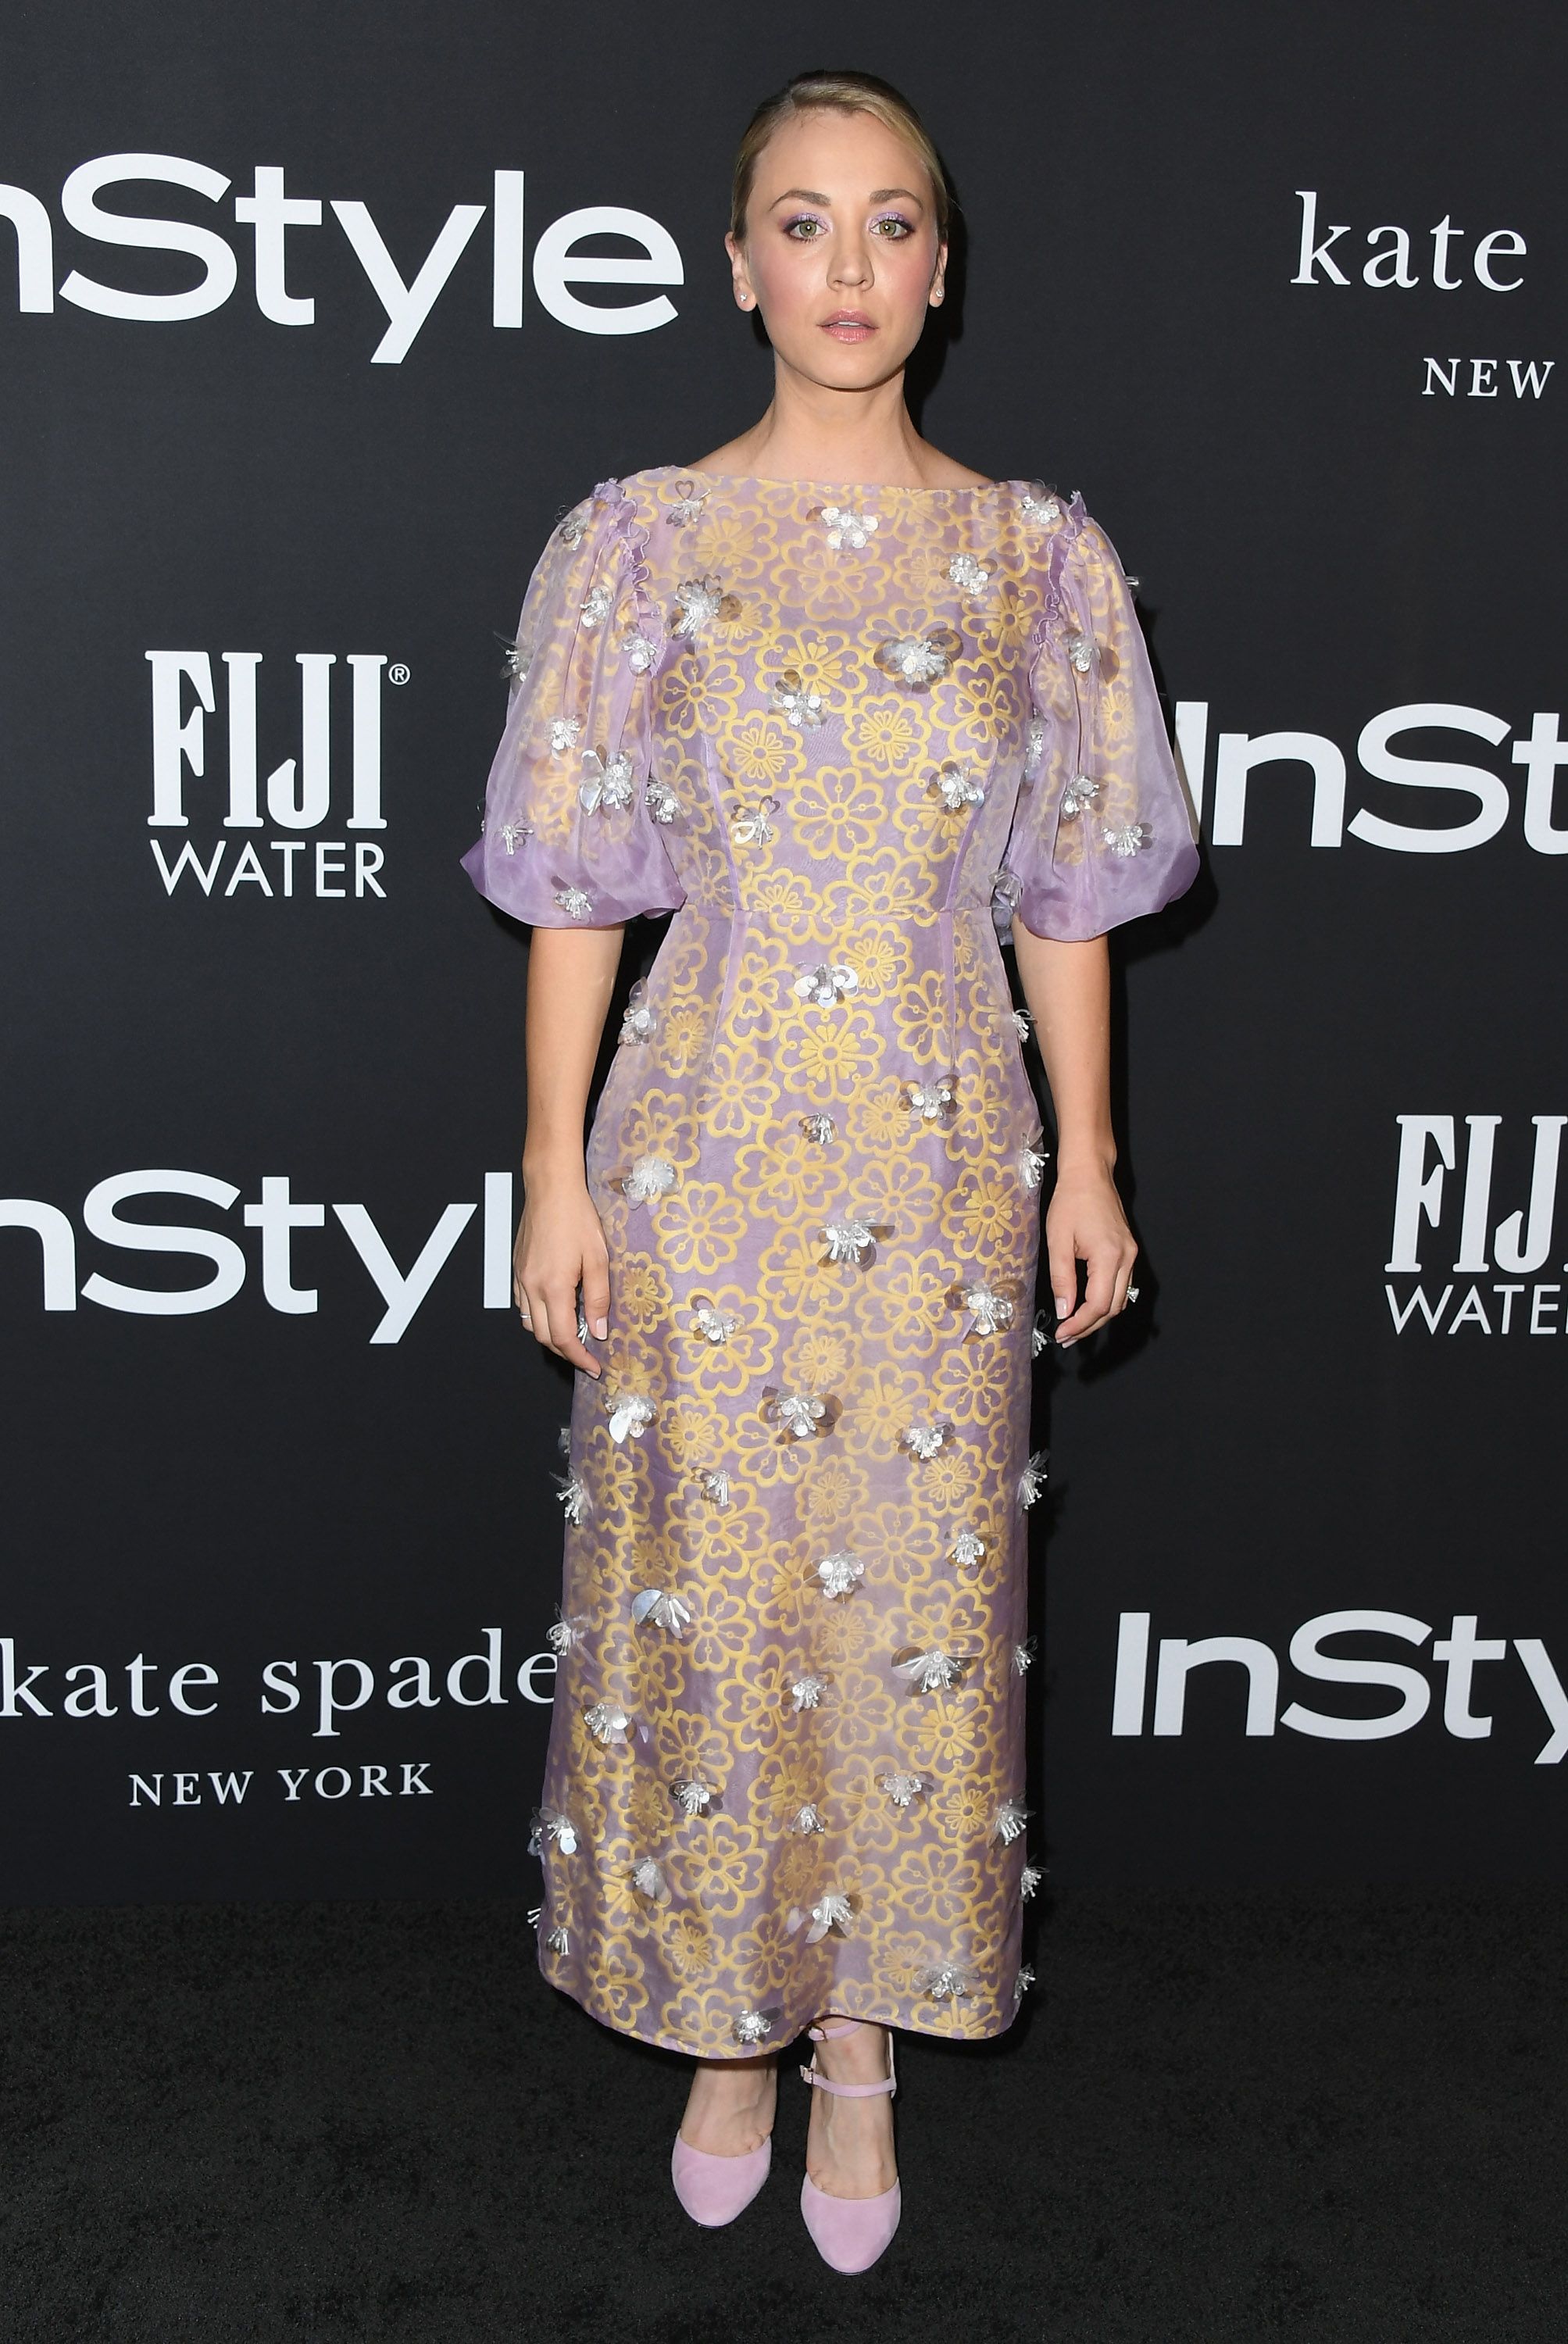 Big Bang Theory actress Kaley Cuoco's unicorn dress looks like